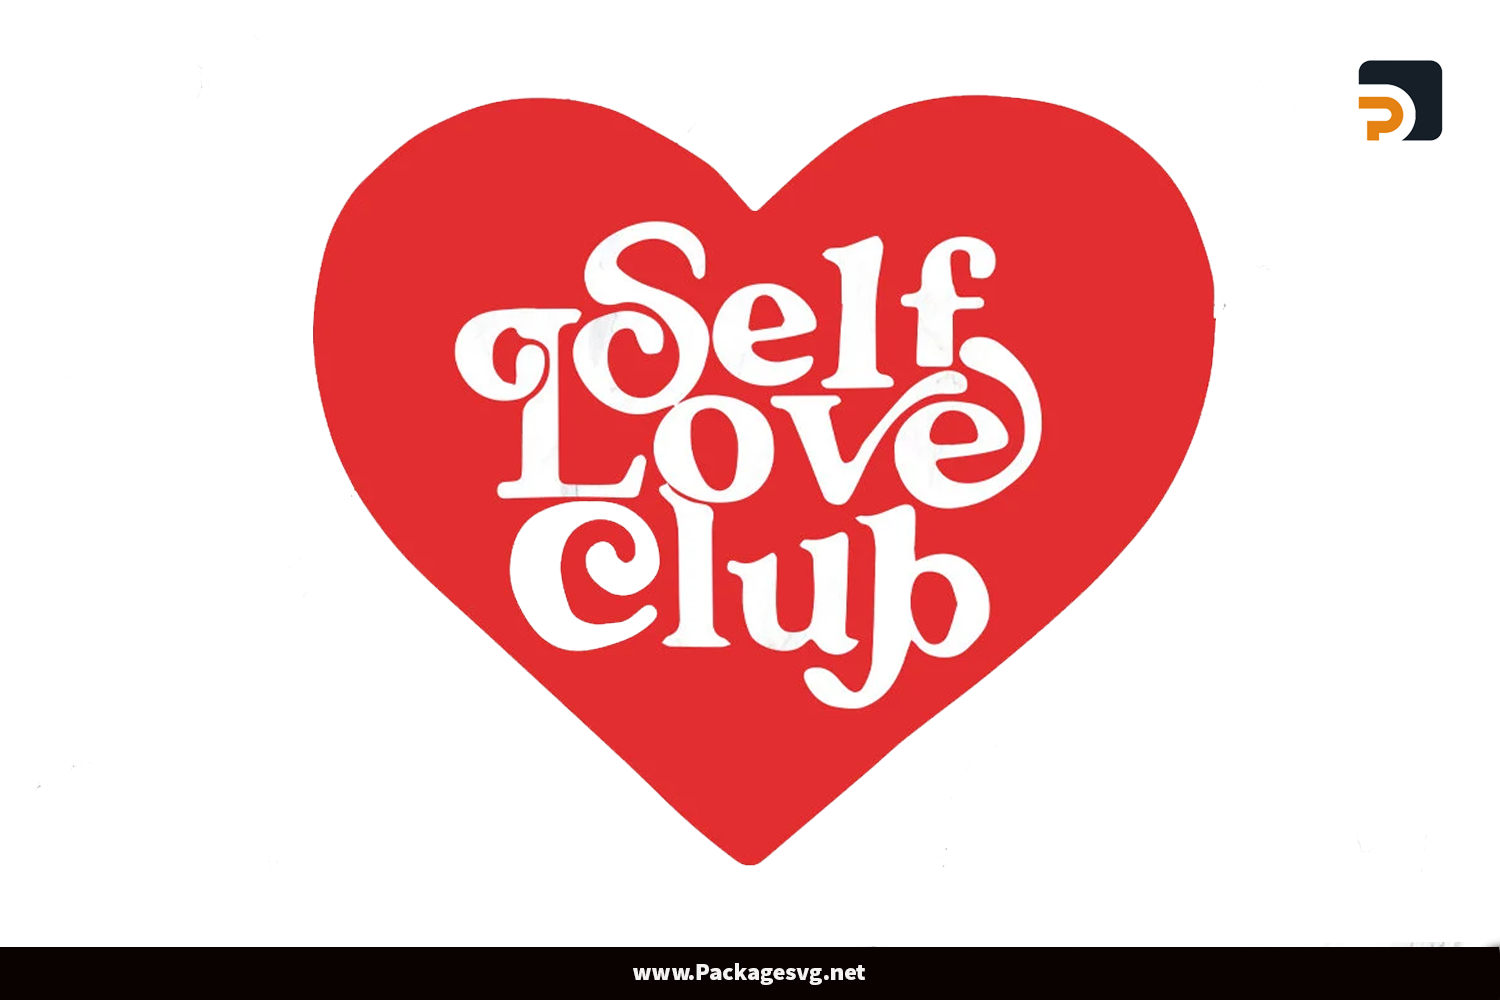 Self Love Club SVG